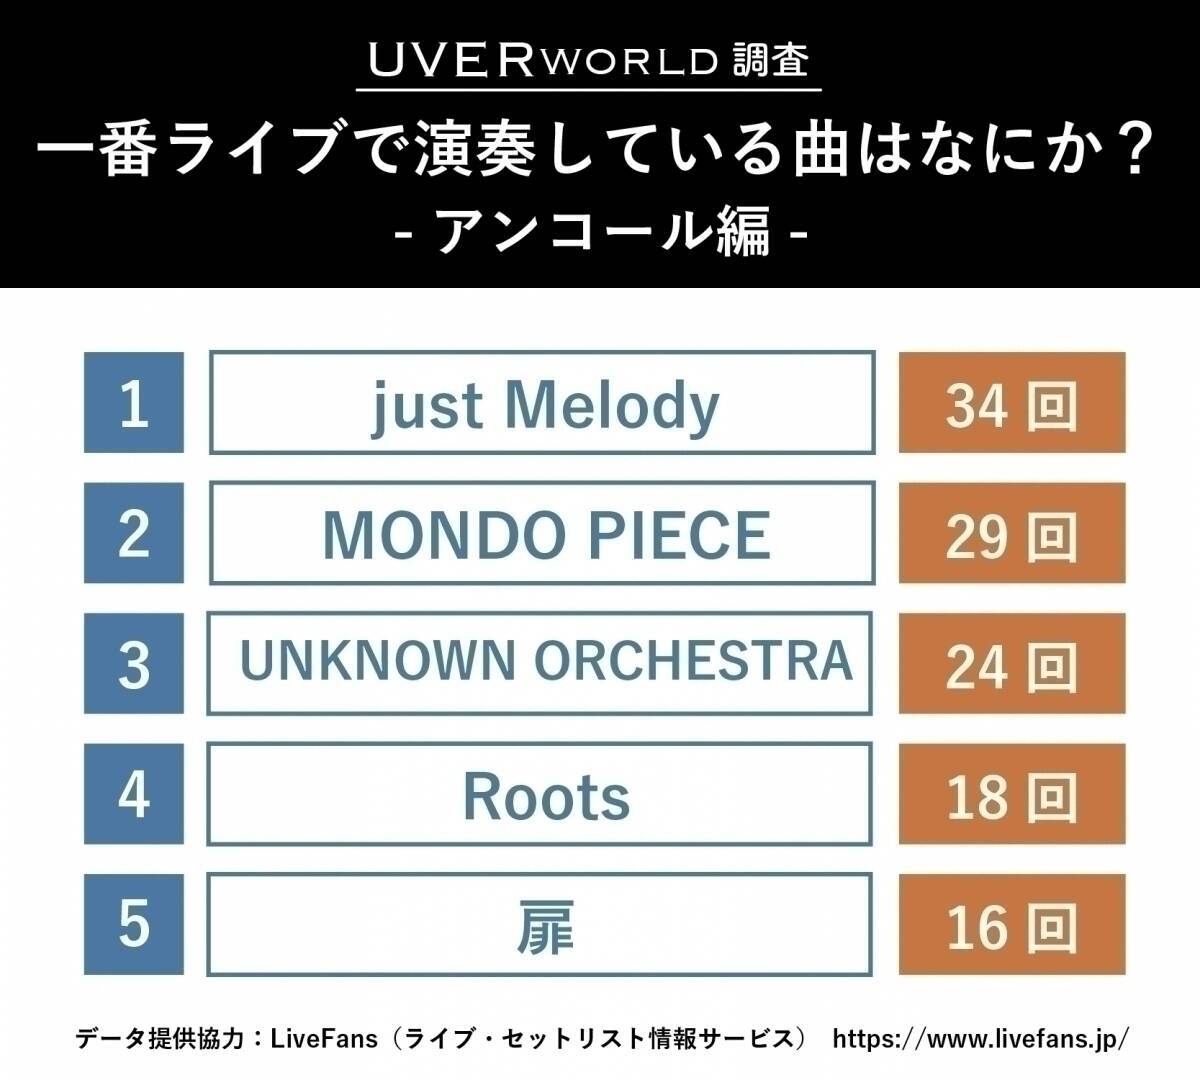 UVERworld、ライブで最も演奏している曲は？ アンコール曲トップは「just Melody」